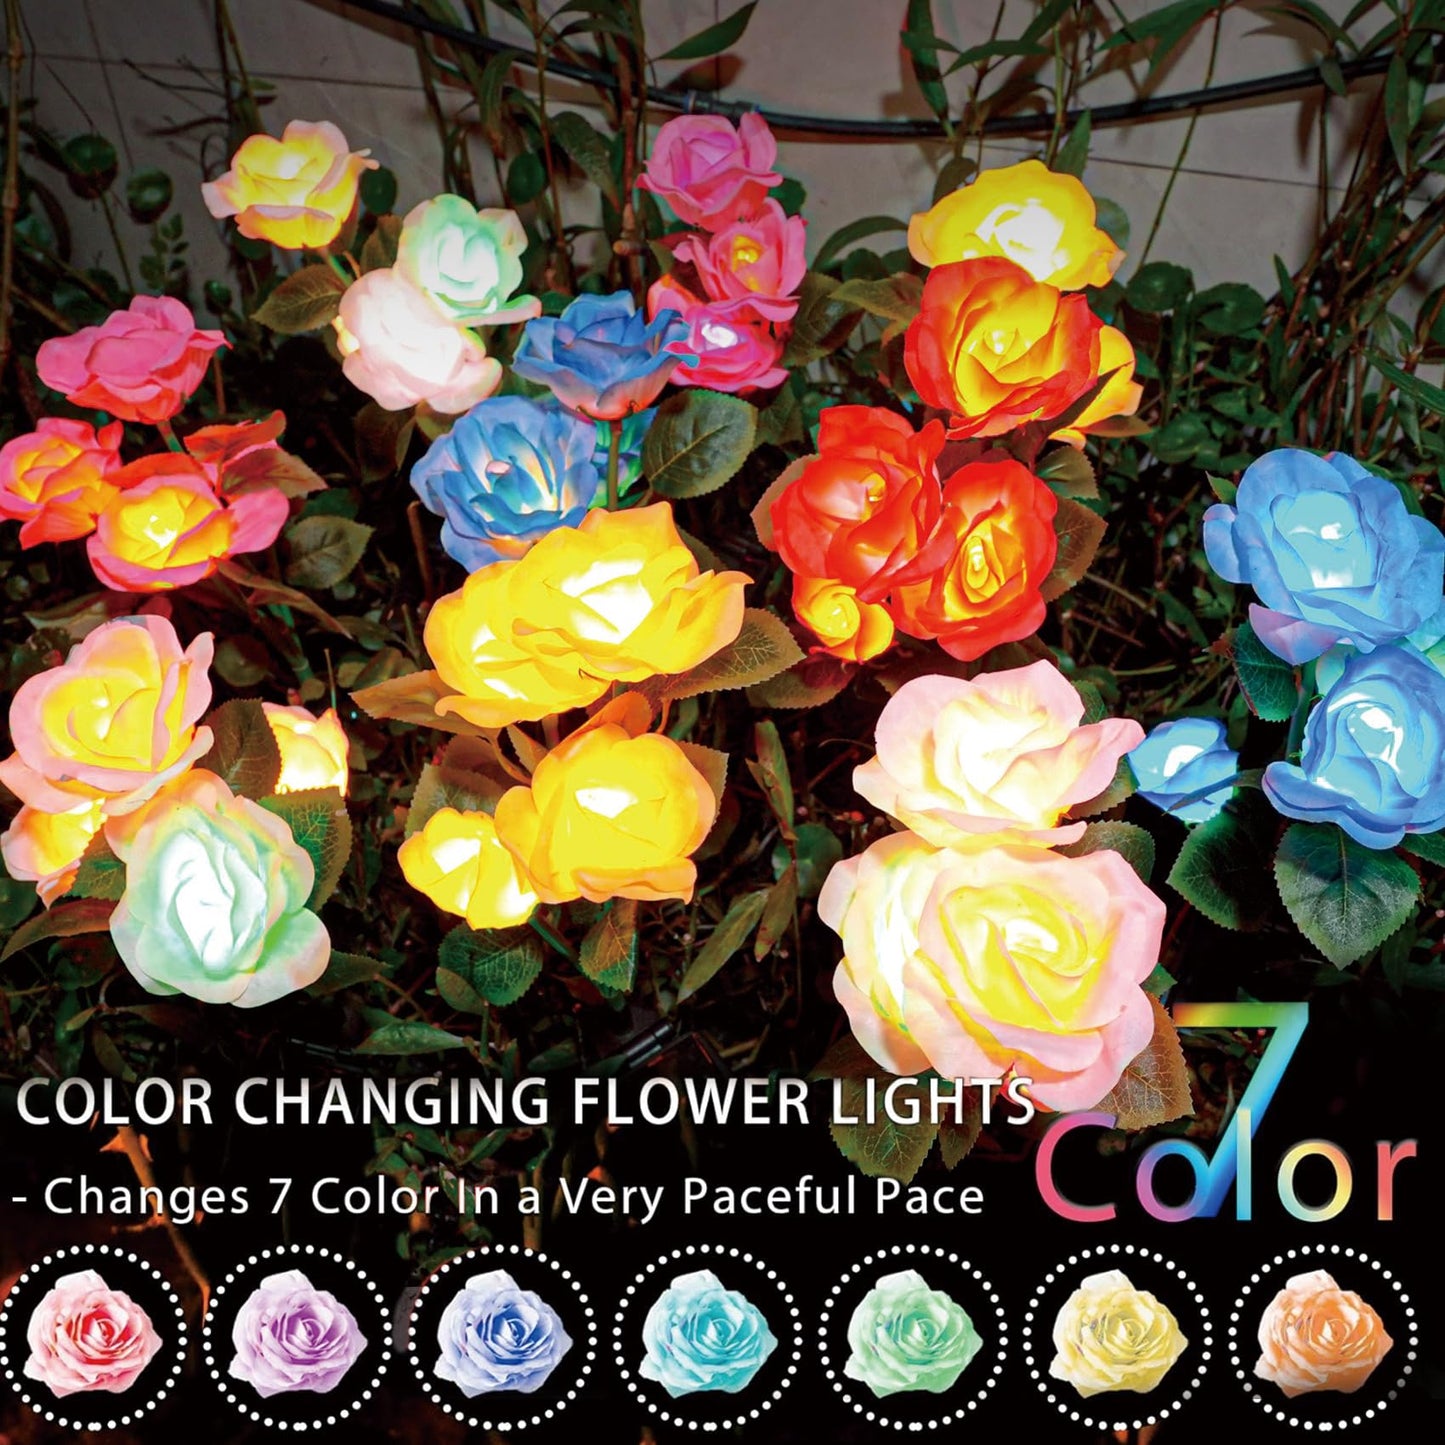 TONULAX Solar Garden Lights - Newest Version Solar Lights Outdoor, 7-Color Changing Rose Lights for Yard, Decoration, Enlarged Solar Panel, More Realistic Rose Flower (2 Packs)